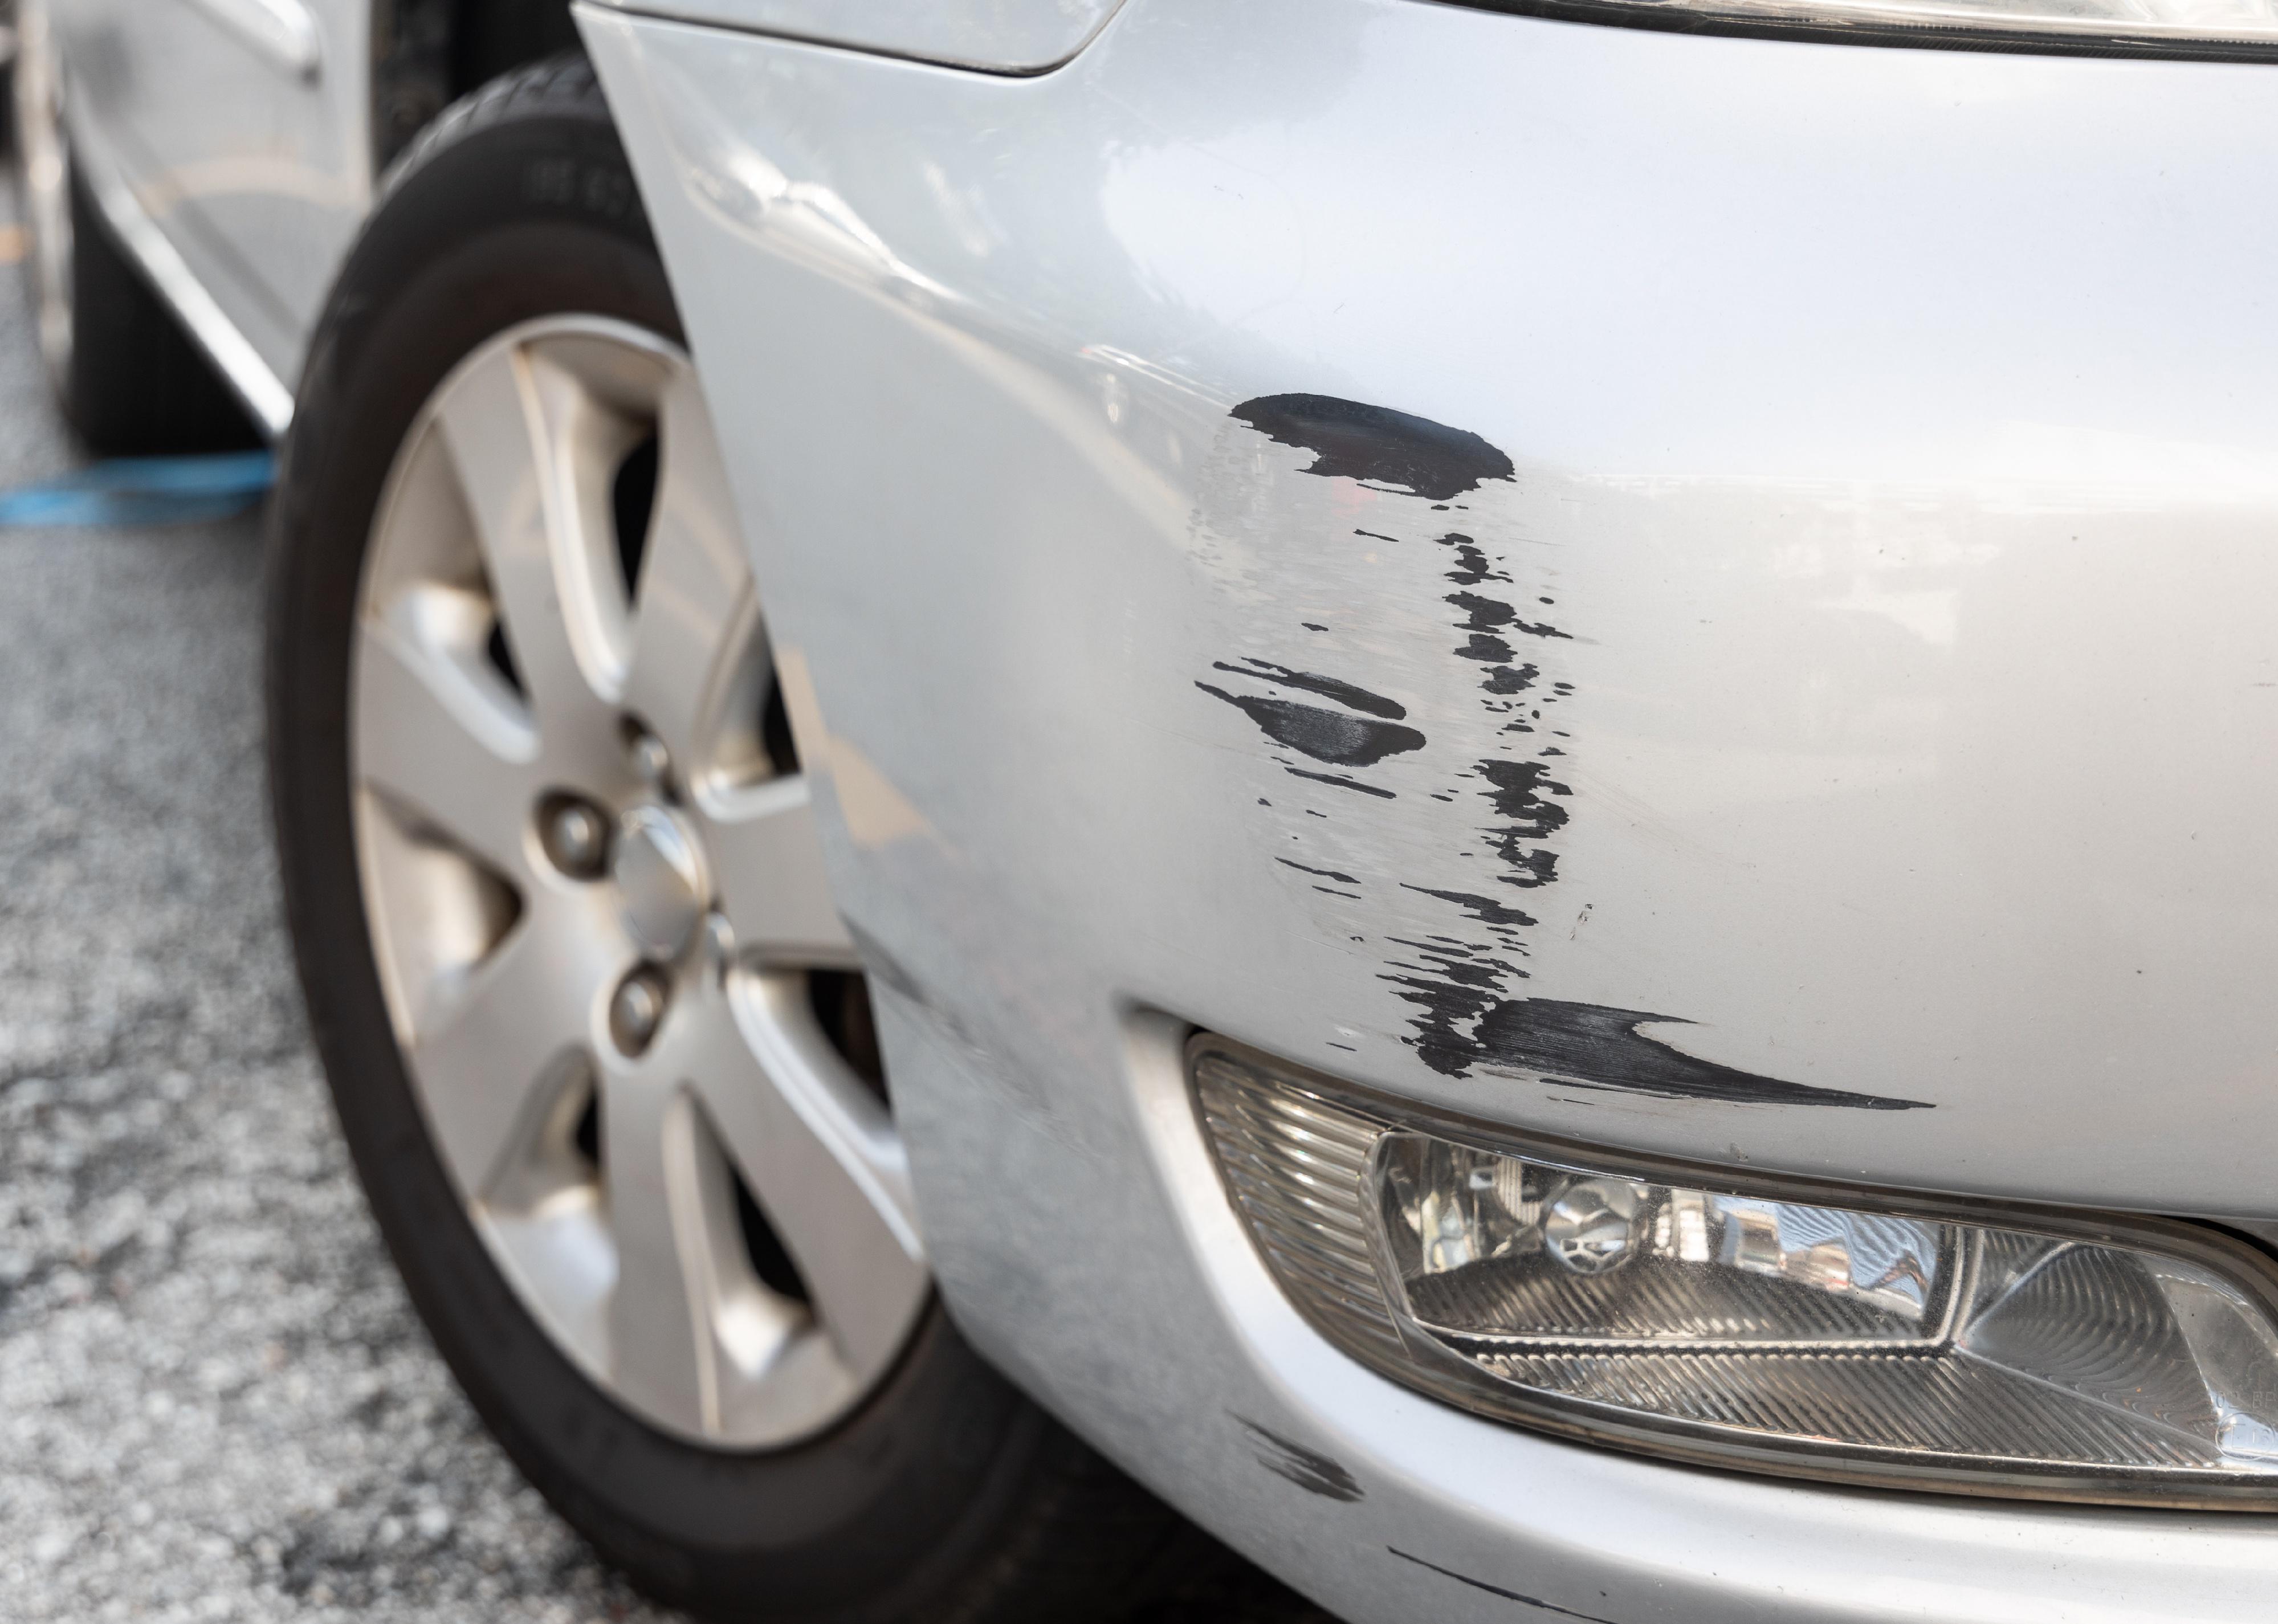 Scratch abrasion on car front bumper